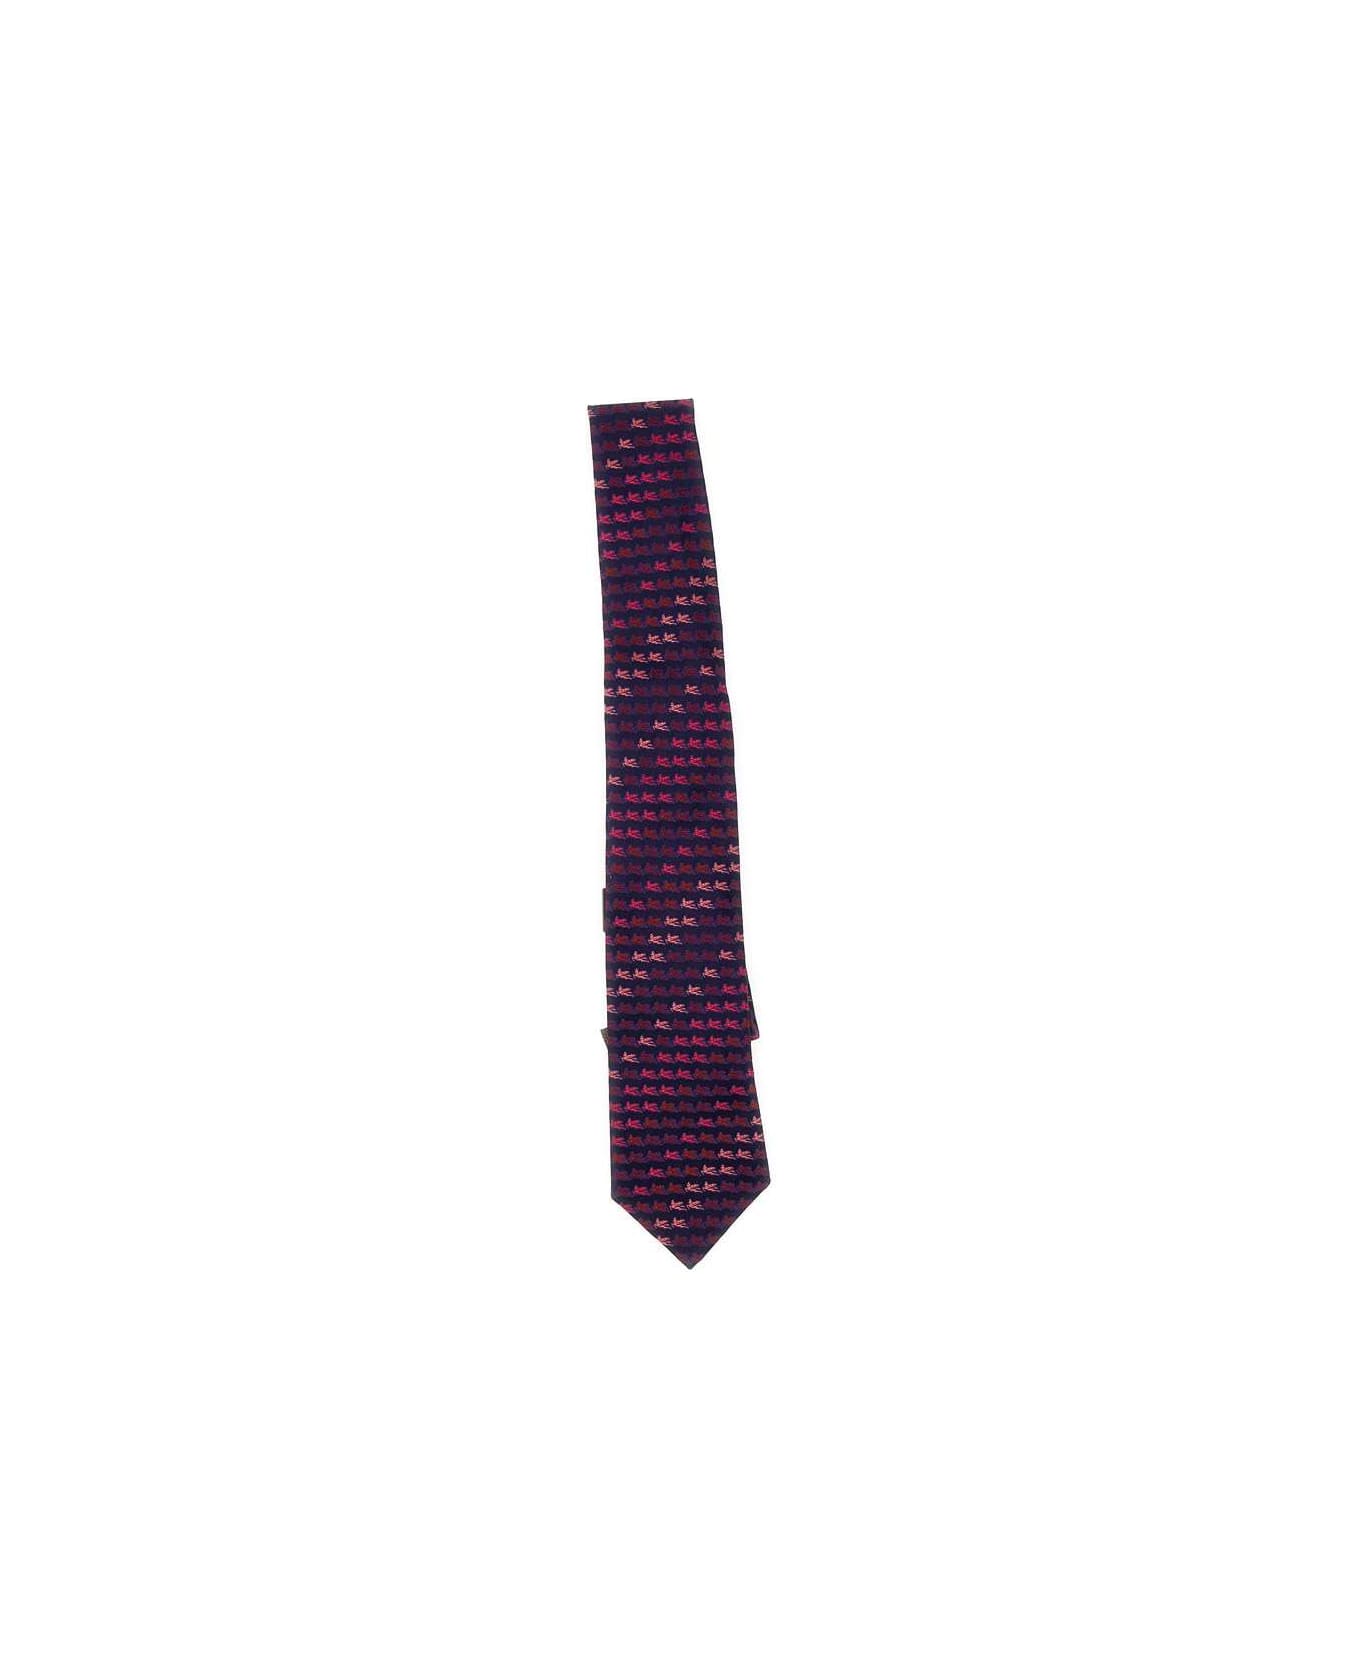 Etro Silk Tie - FUCHSIA